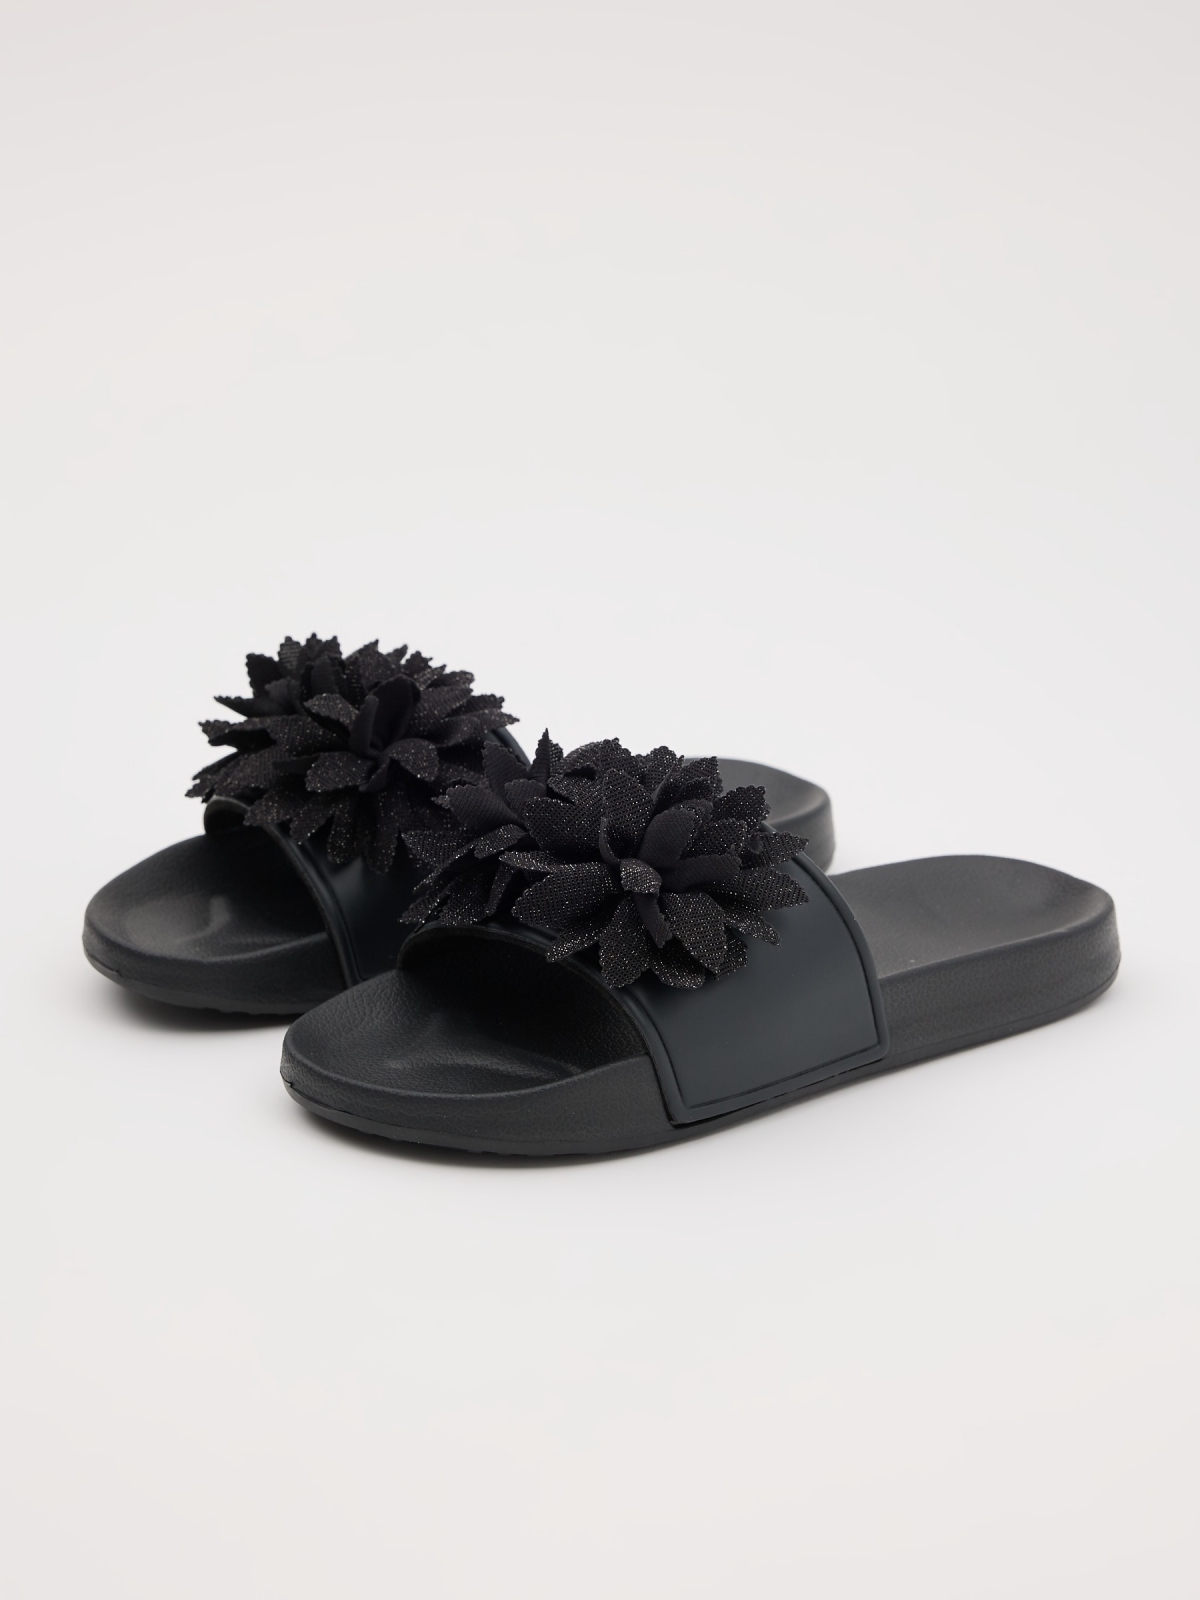 Flip flops com flor preto vista frontal 45º